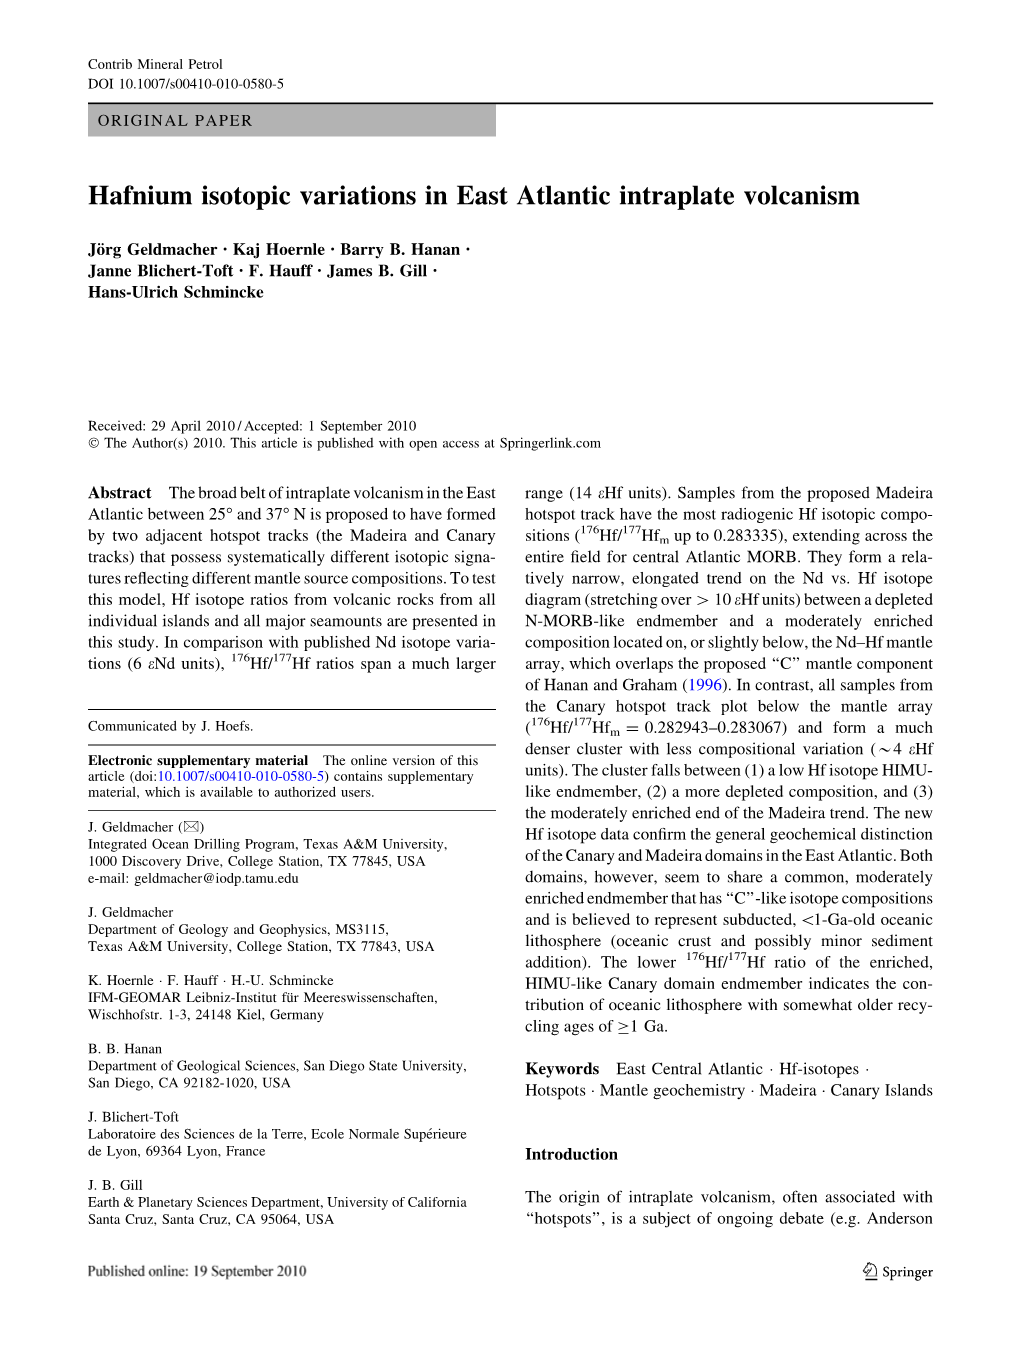 Hafnium Isotopic Variations in East Atlantic Intraplate Volcanism